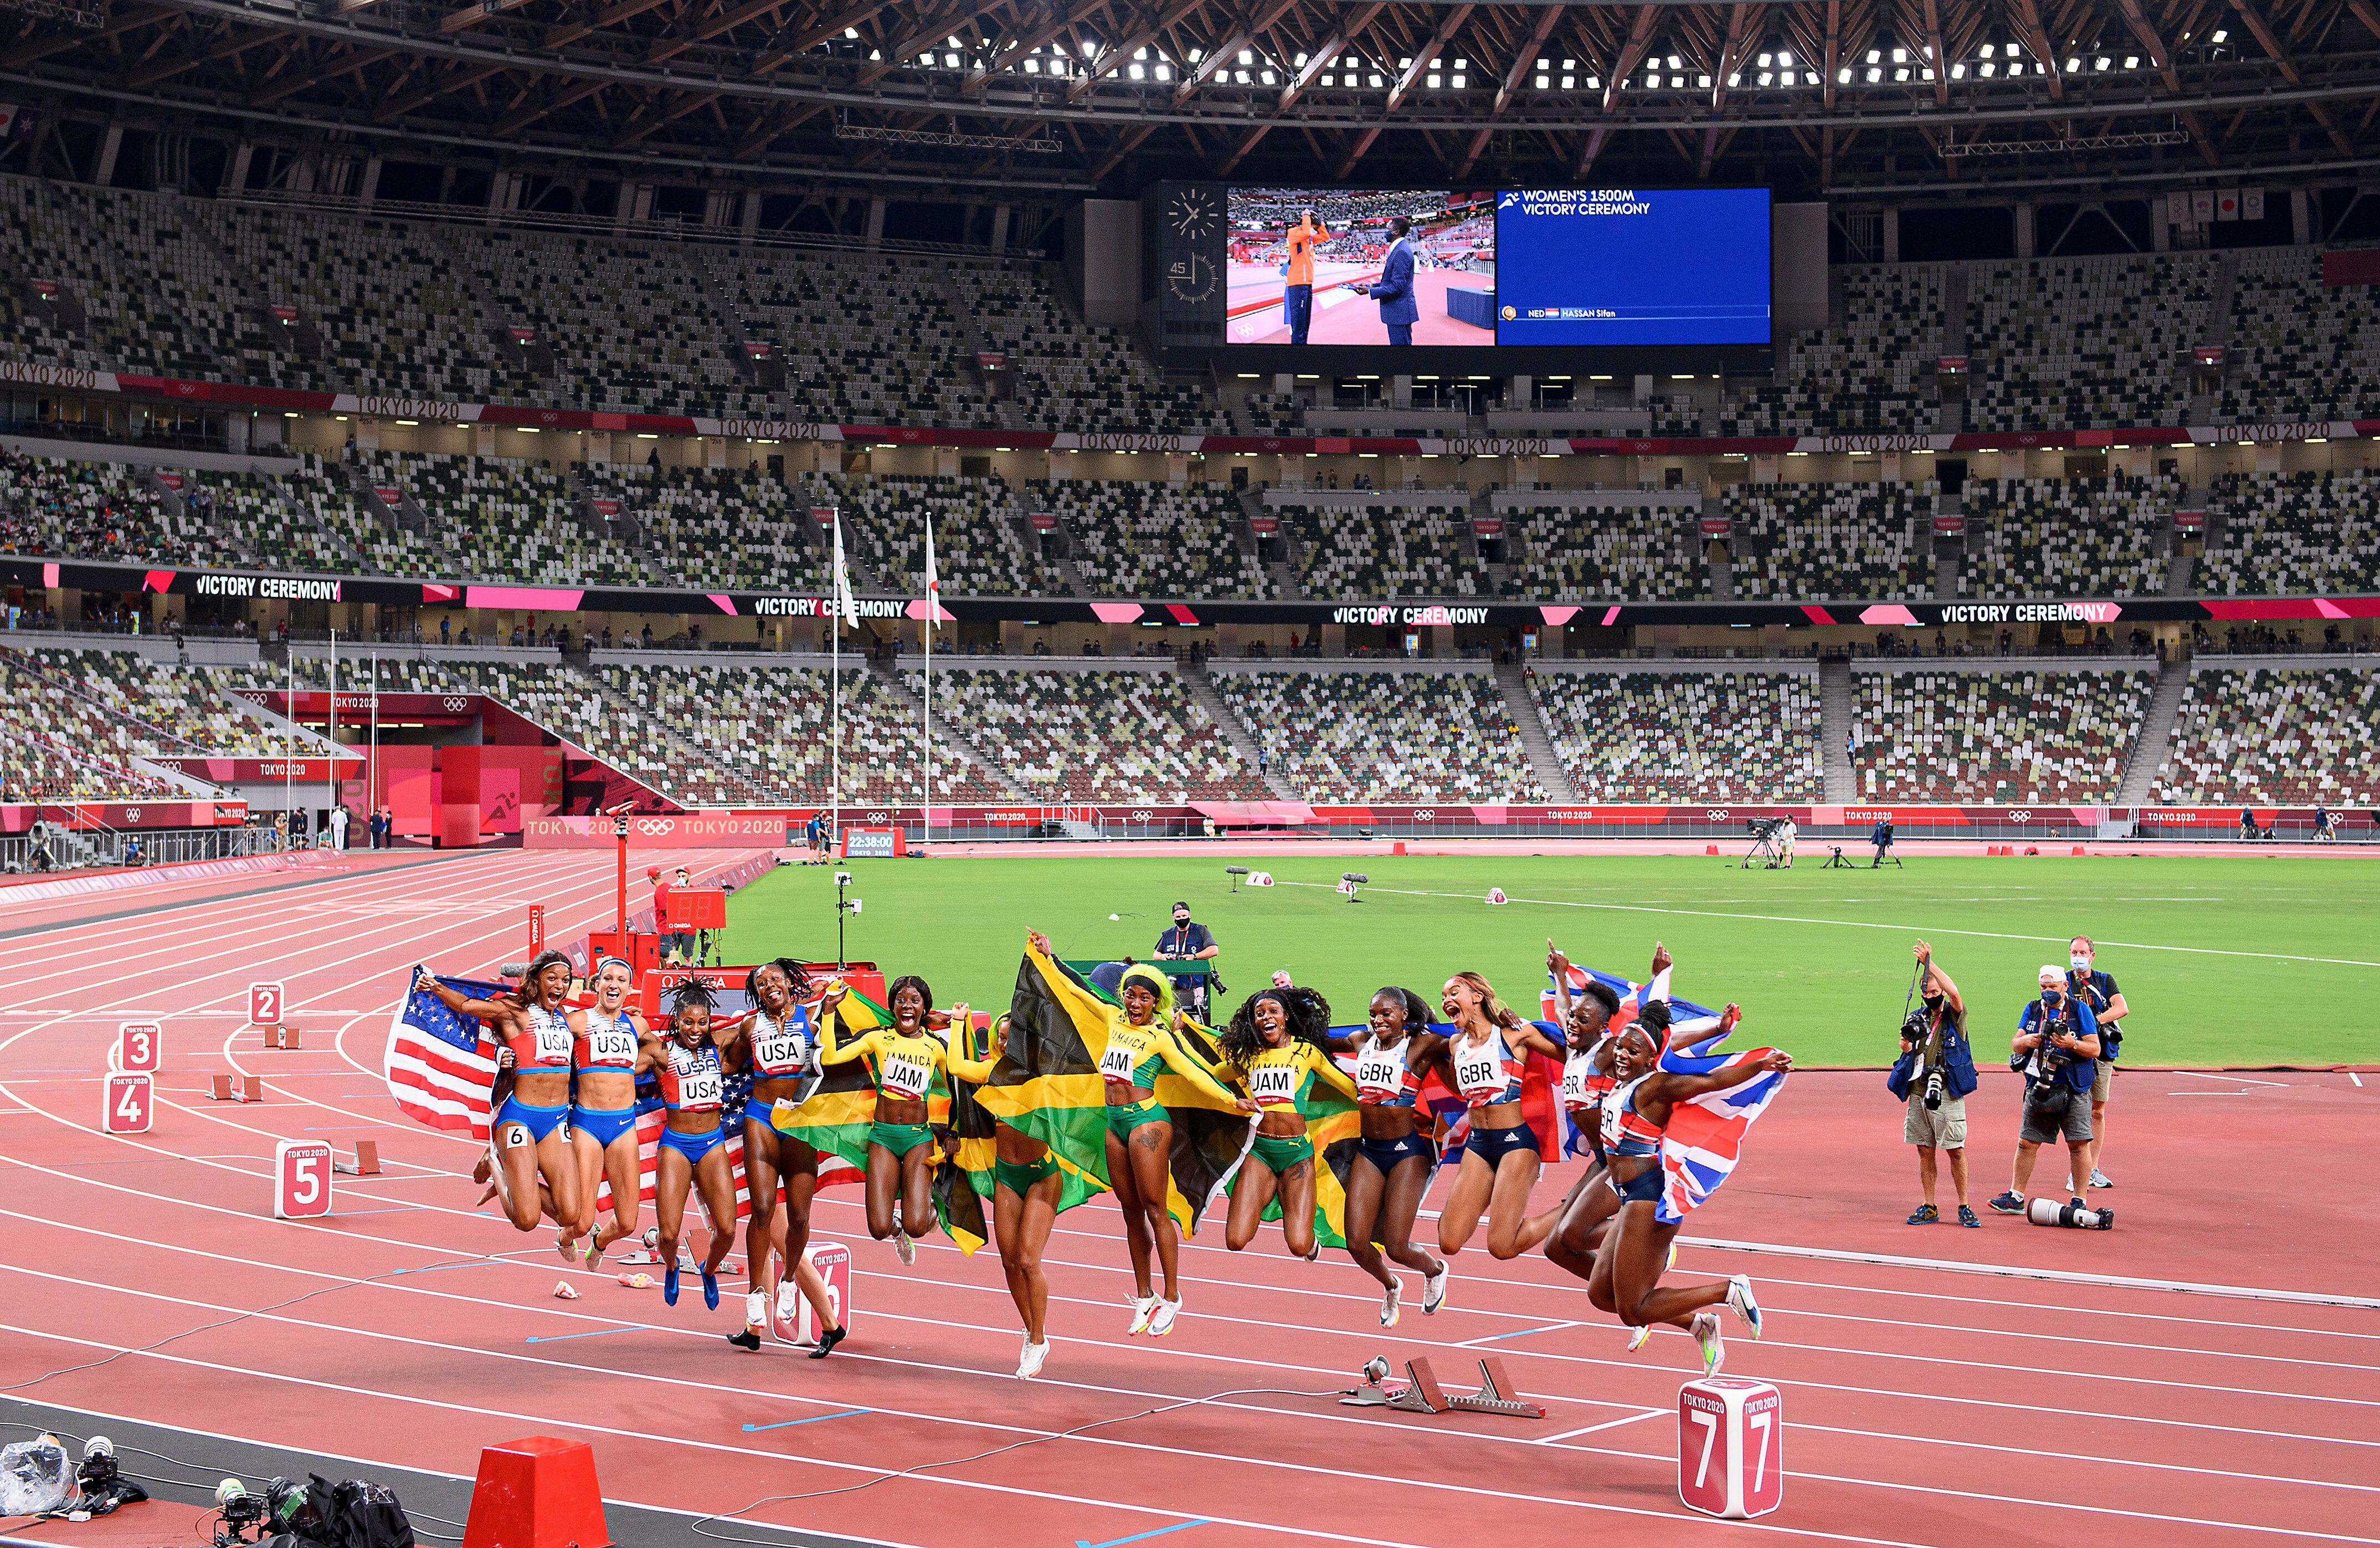 watch world athletics championships 2022